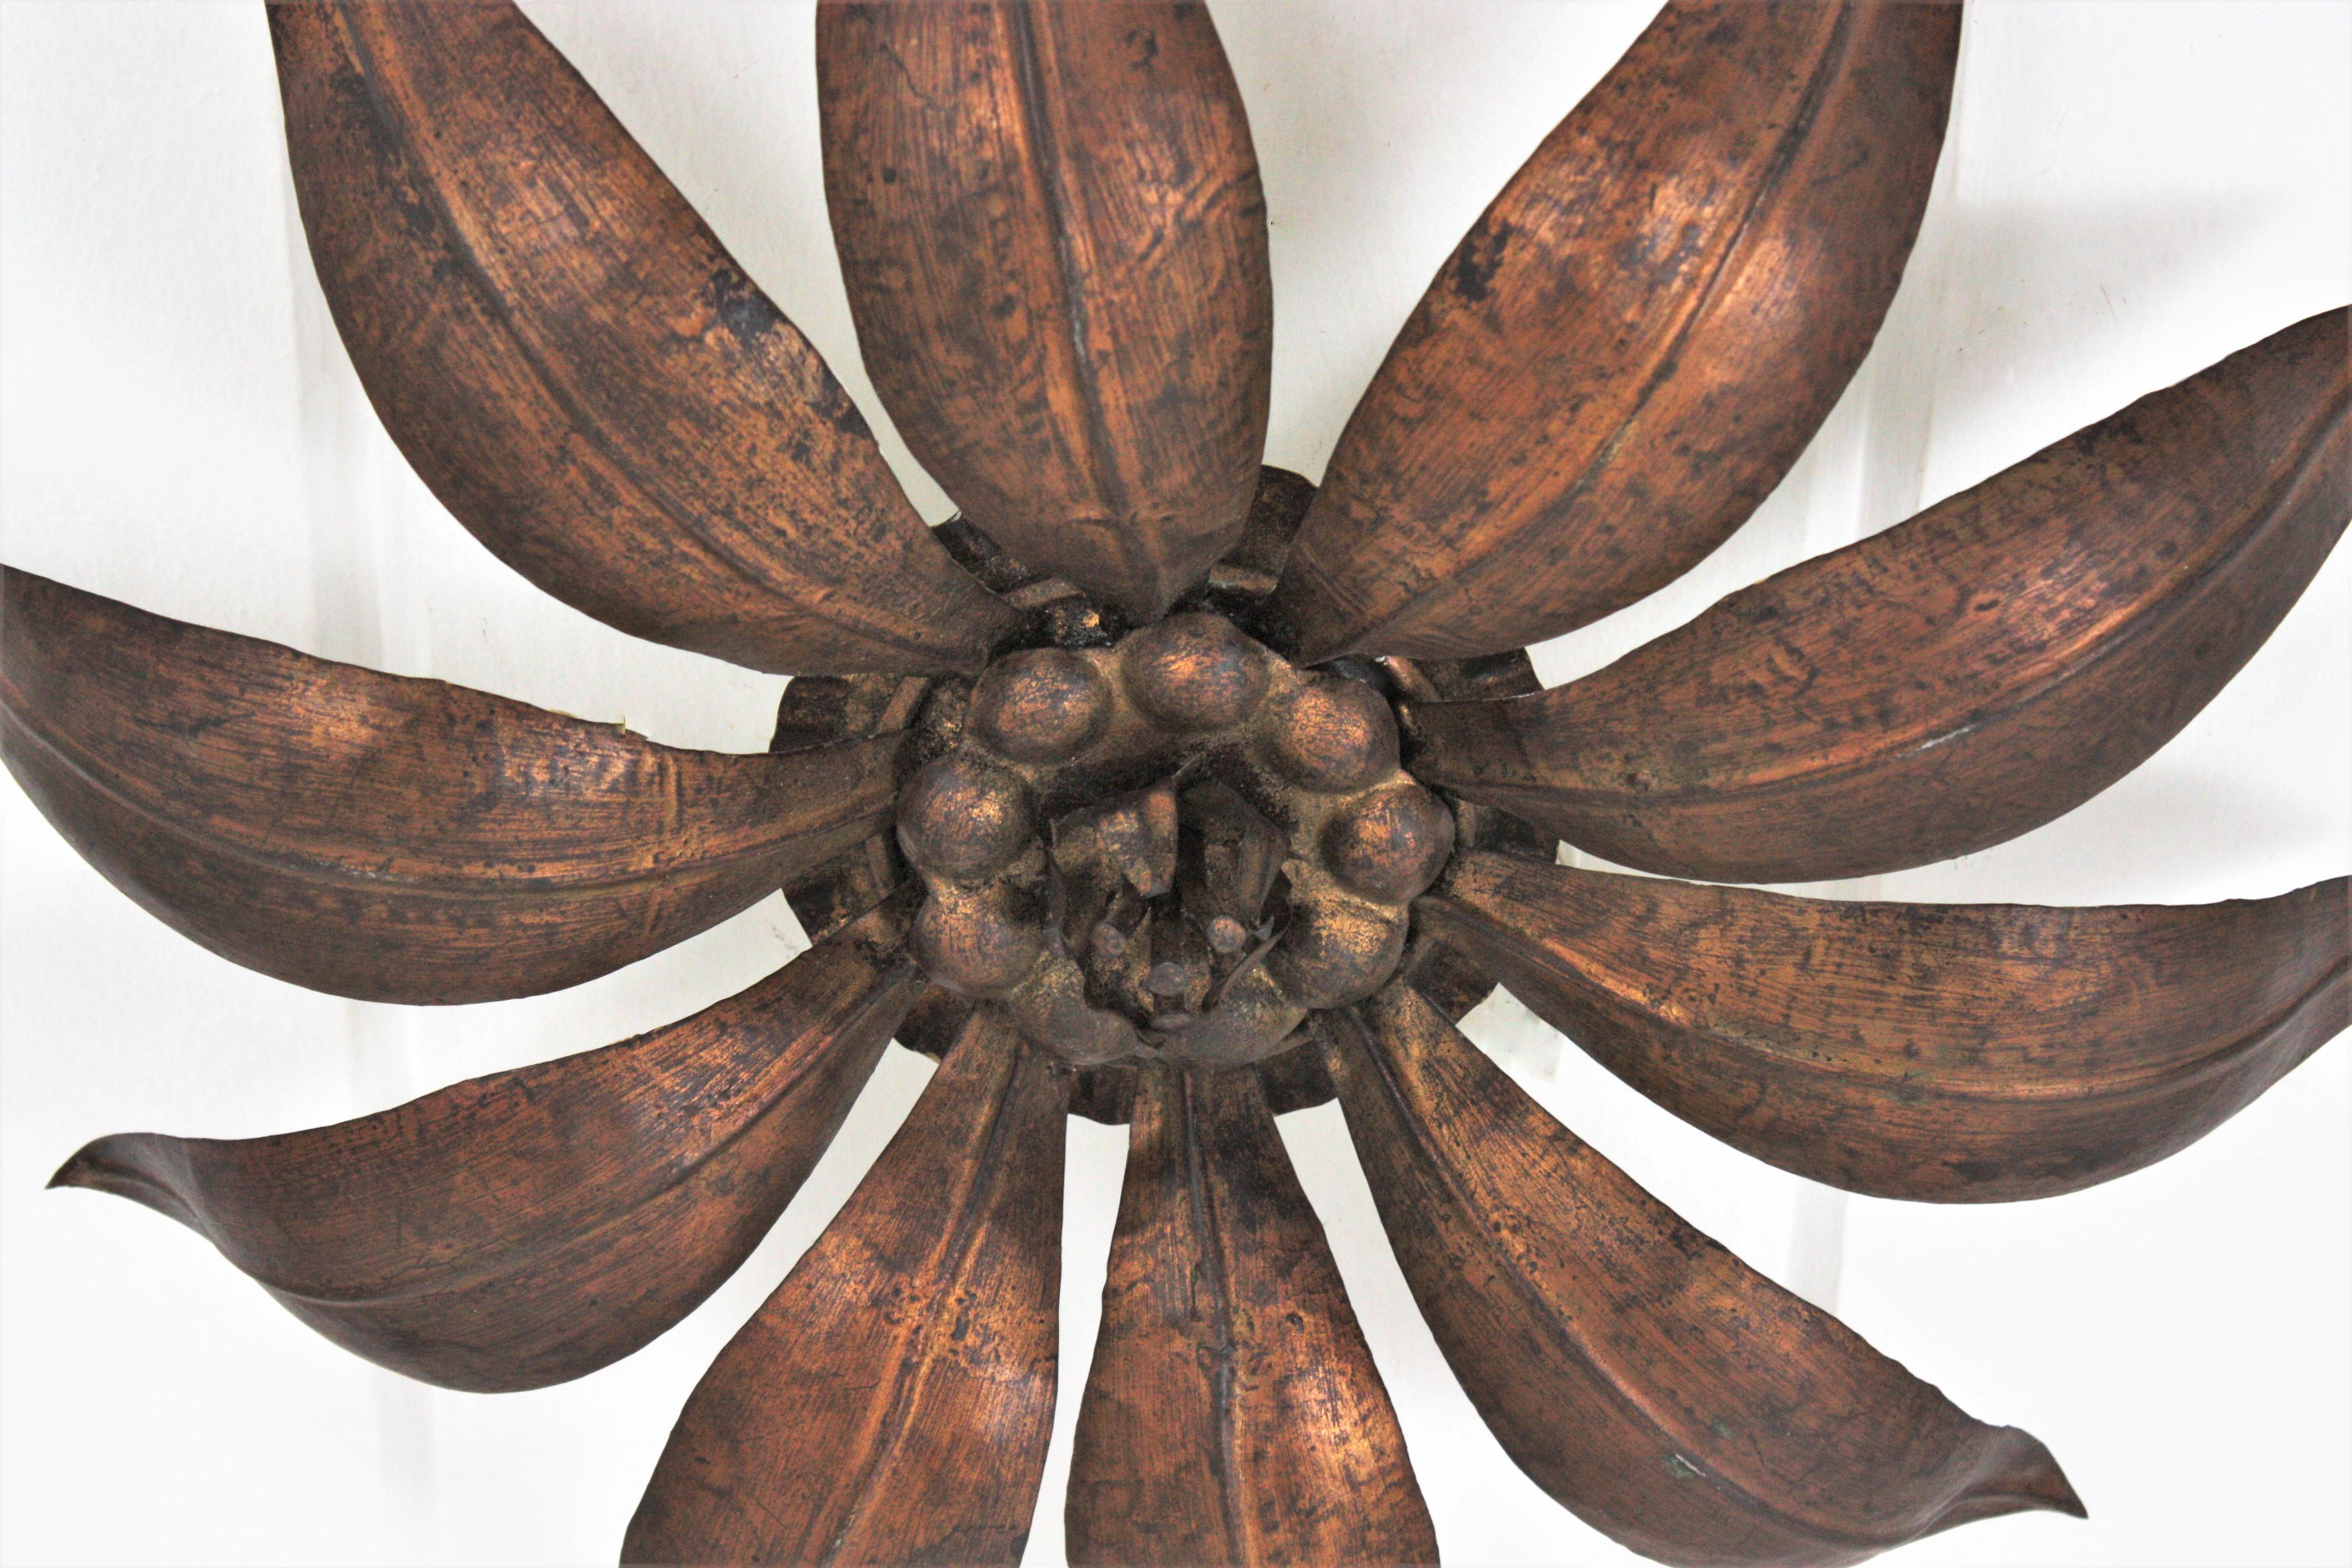 20th Century French Sunburst Flower Ceiling Light Fixture in Bronze Gilt Iron, 1940s For Sale